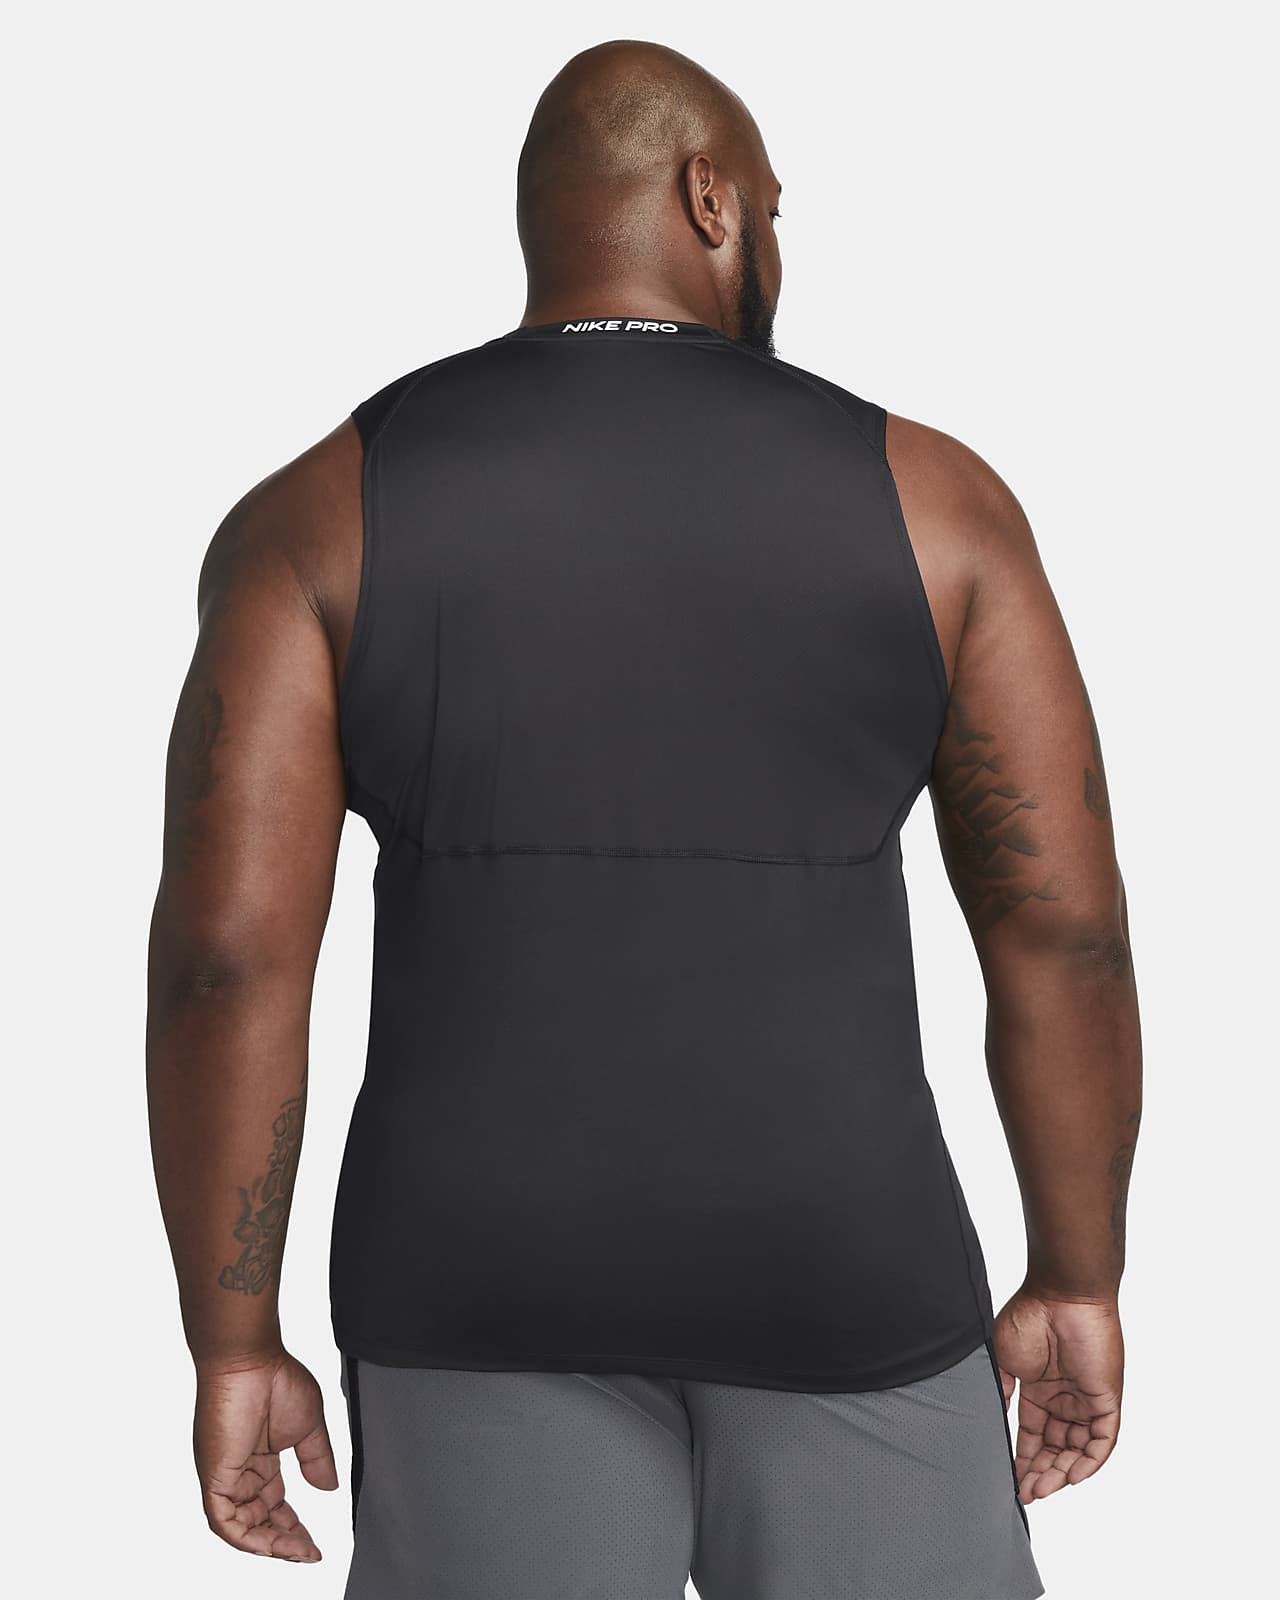 verbannen comfortabel Kinematica Nike Pro Dri-FIT Men's Slim Fit Sleeveless Top. Nike.com